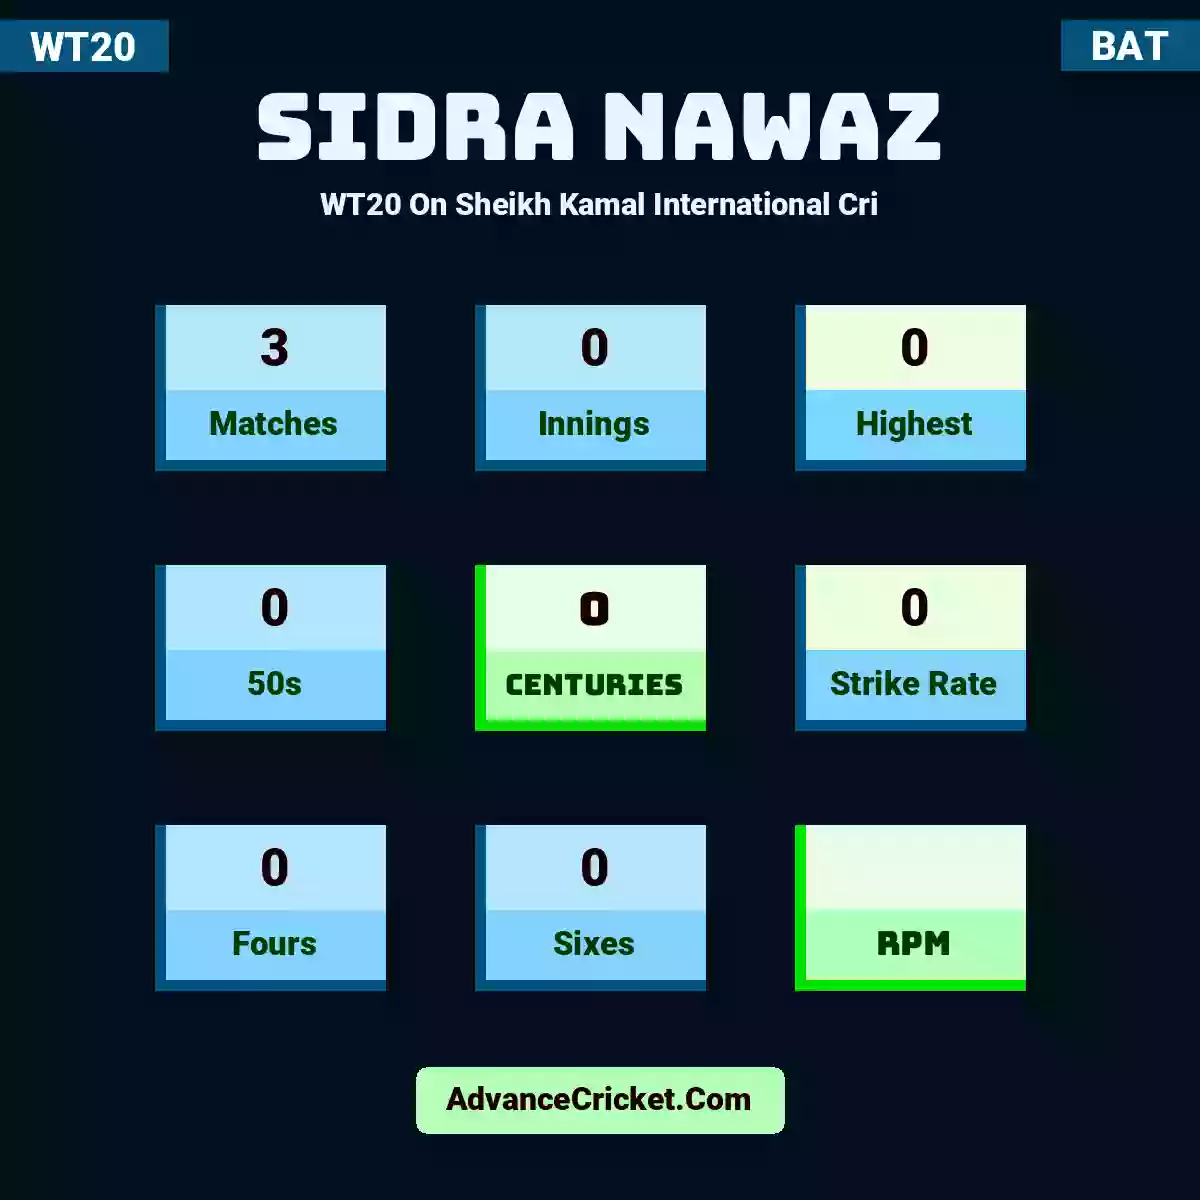 Sidra Nawaz WT20  On Sheikh Kamal International Cri, Sidra Nawaz played 3 matches, scored 0 runs as highest, 0 half-centuries, and 0 centuries, with a strike rate of 0. S.Nawaz hit 0 fours and 0 sixes.